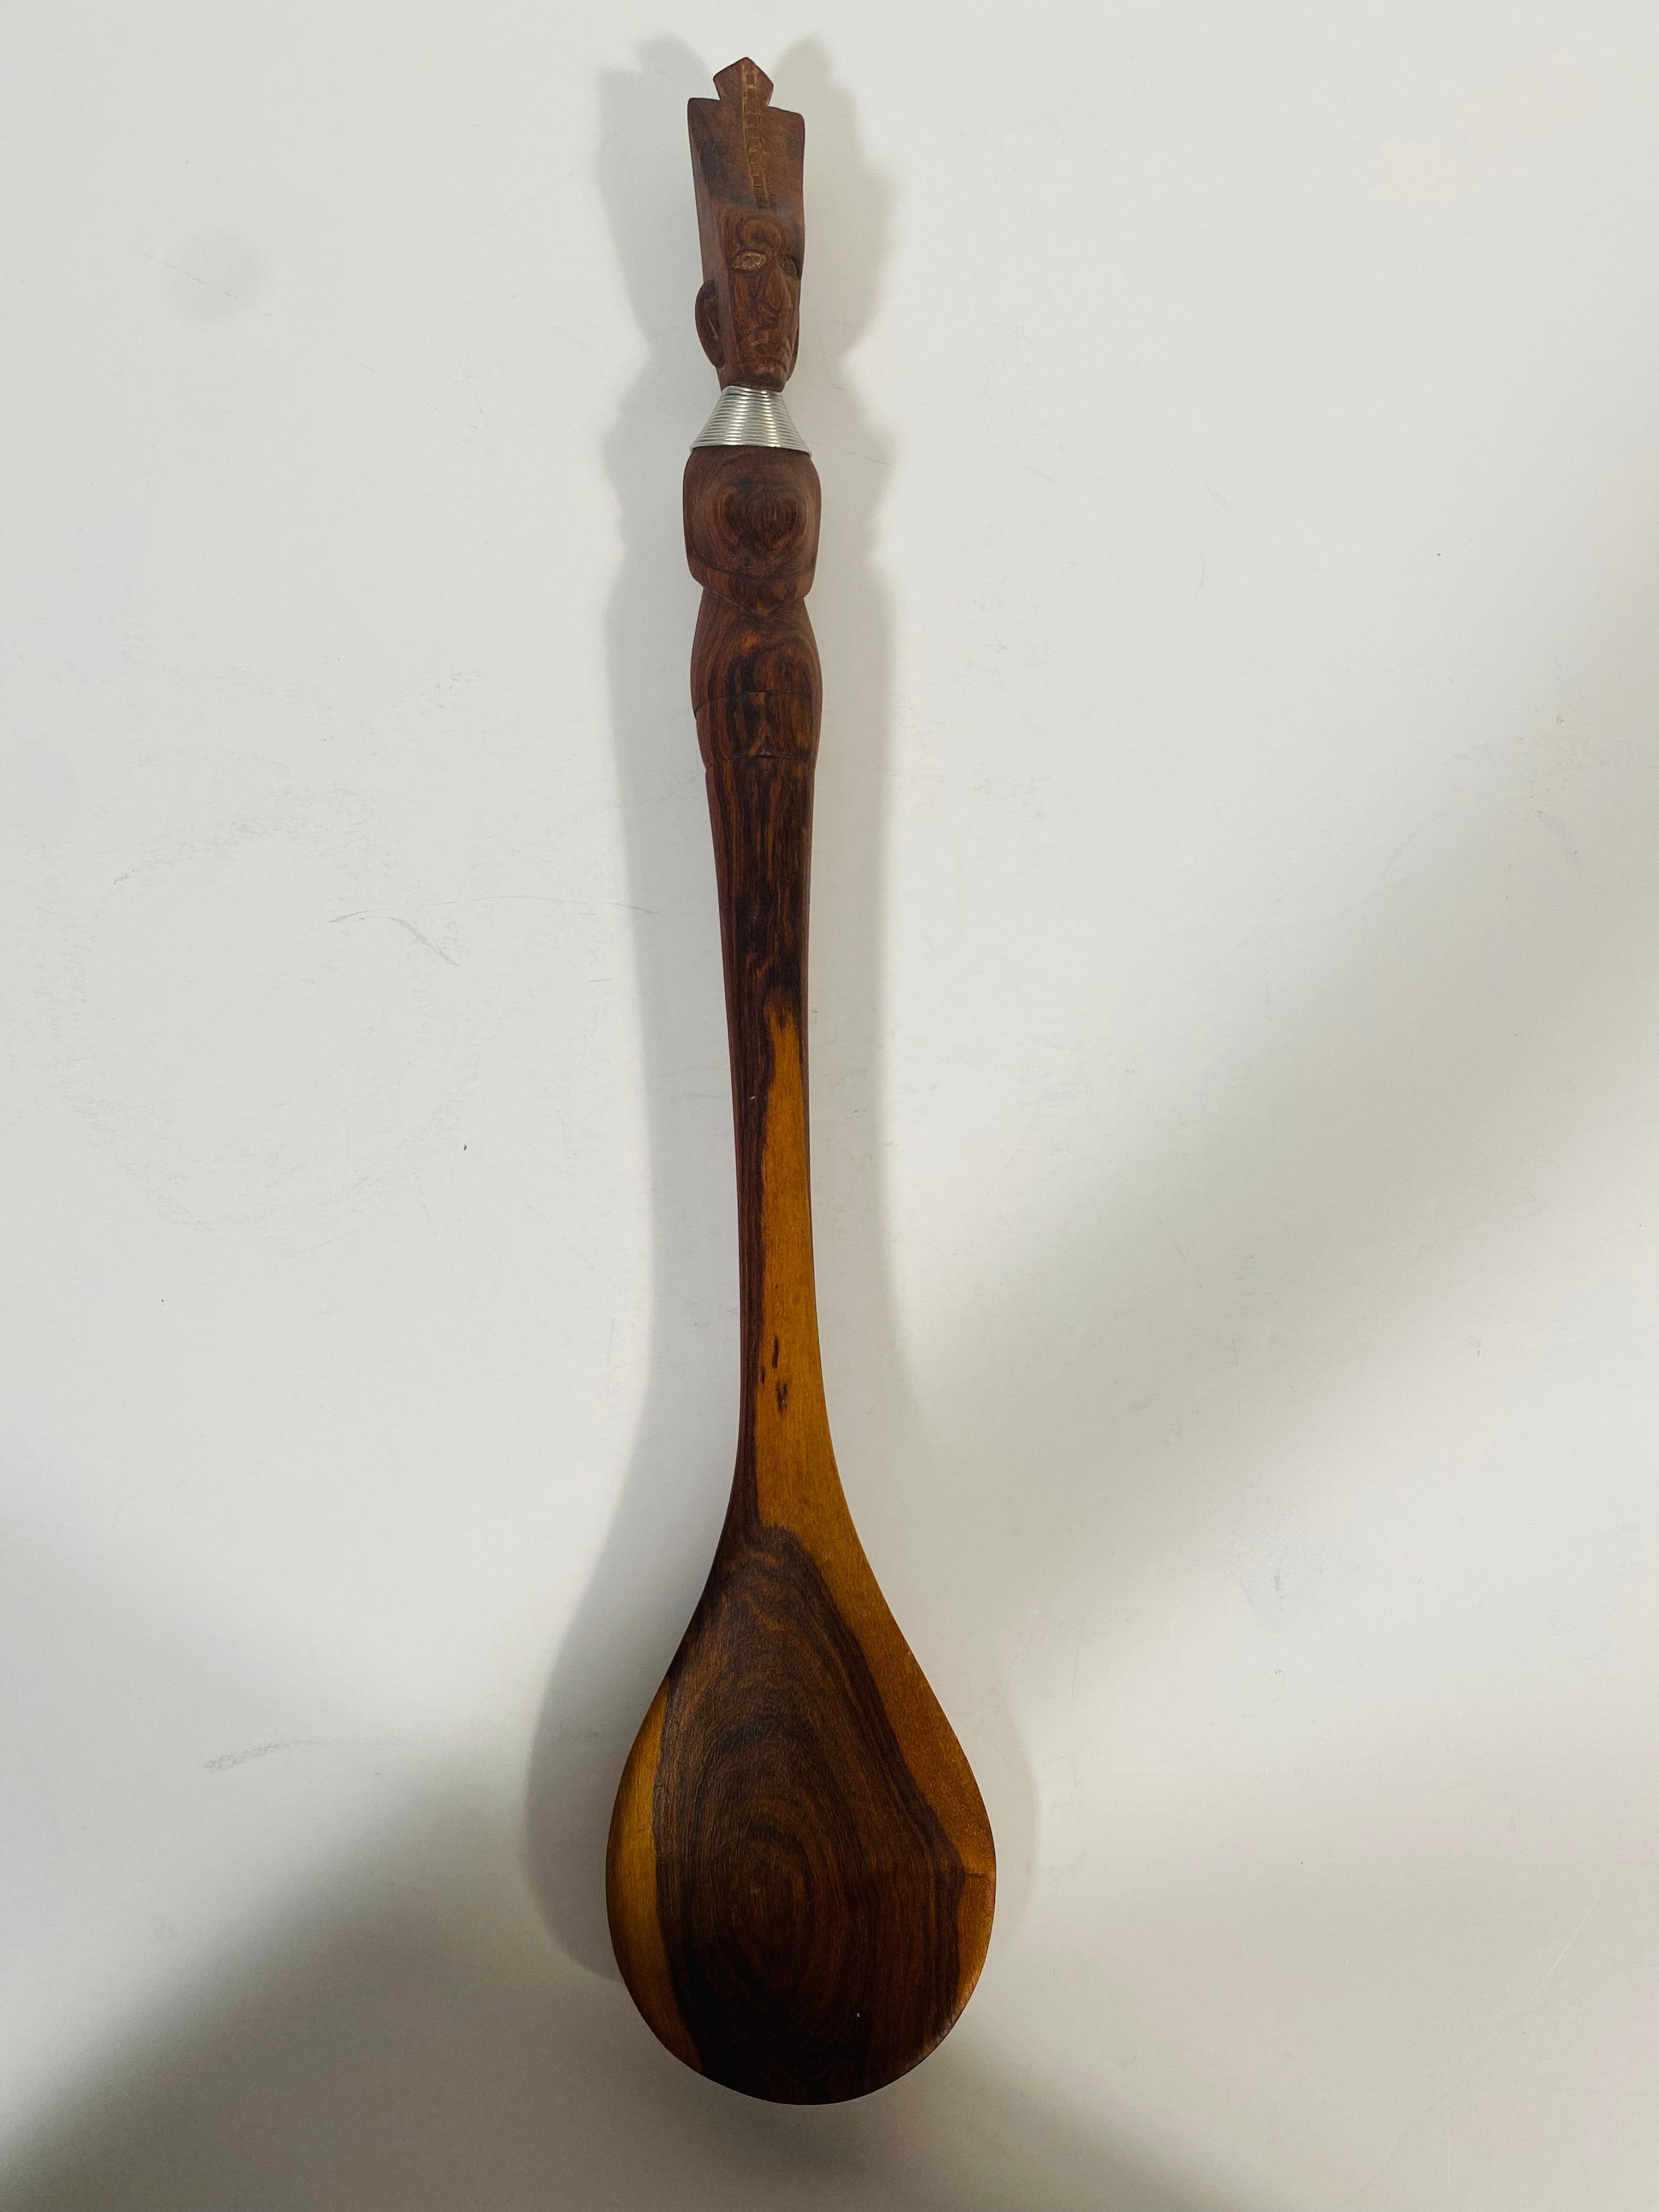 Vintage Hand Carved Wood Figurine Spoon Fork and Knife Set